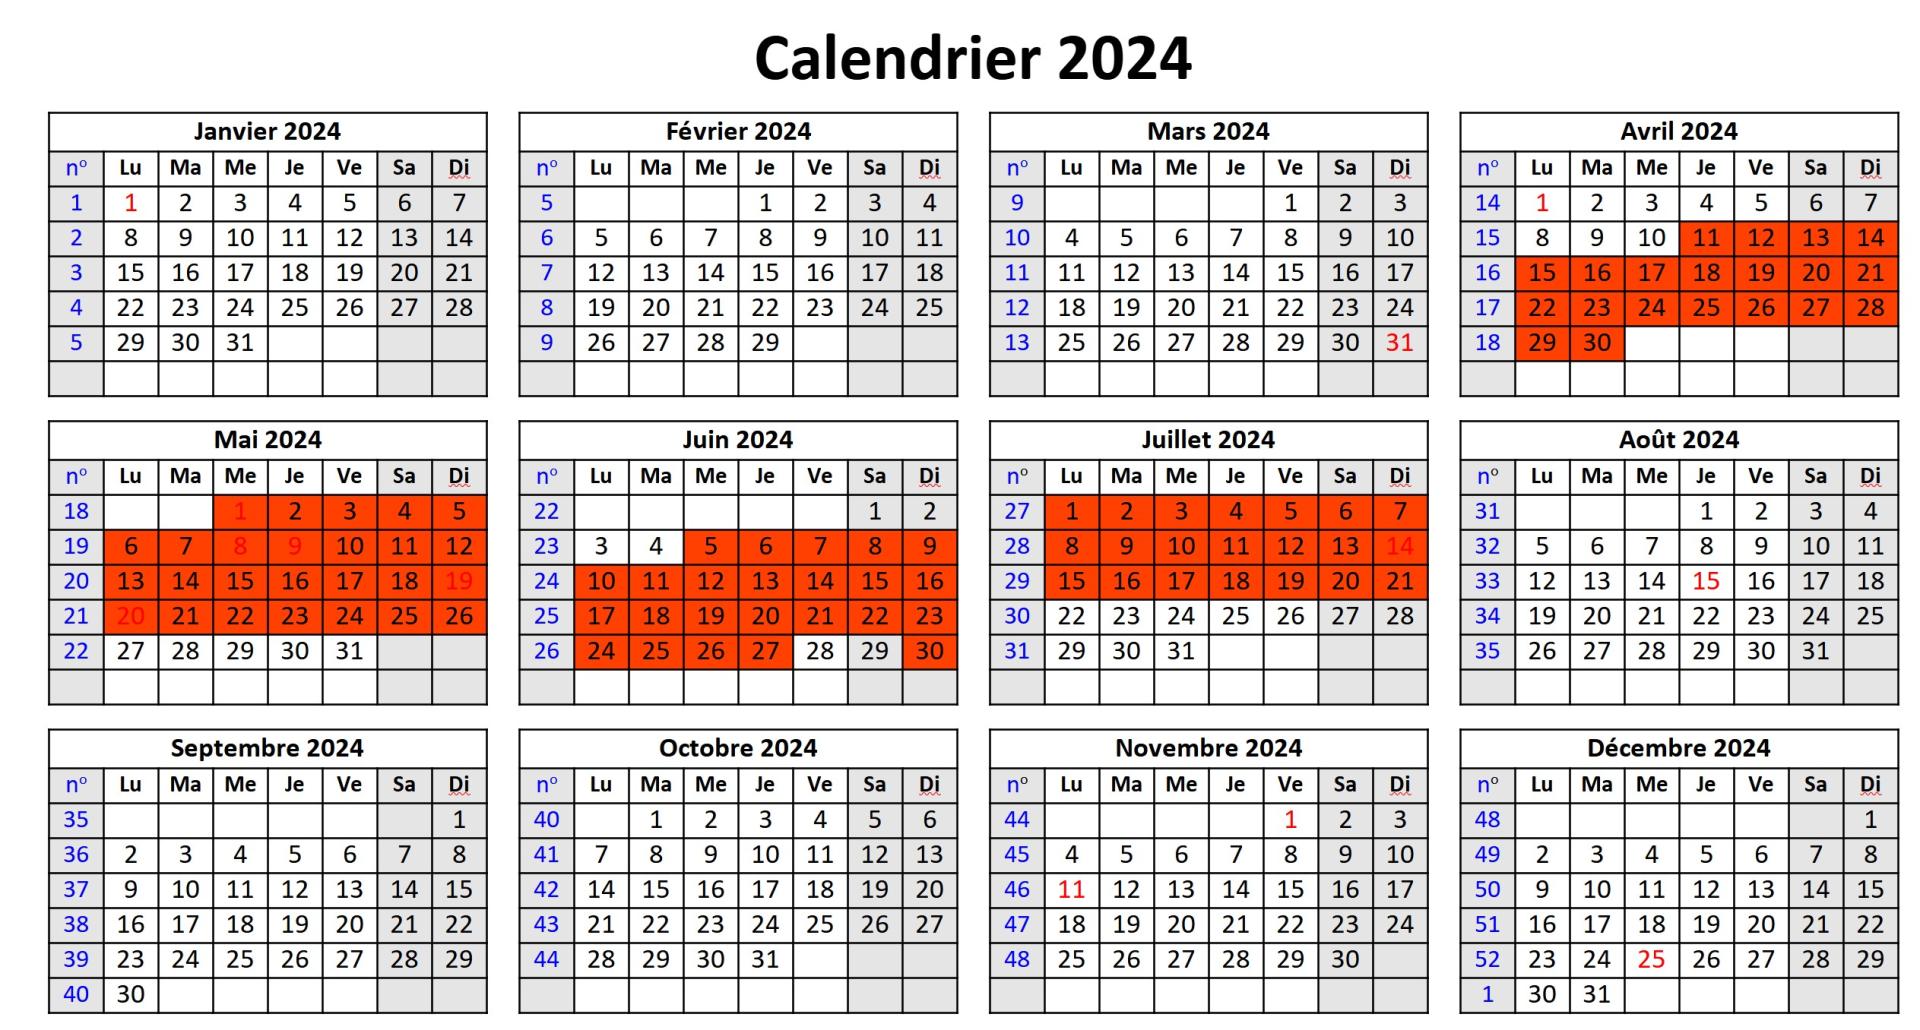 Calendrier annuel 2024 v3